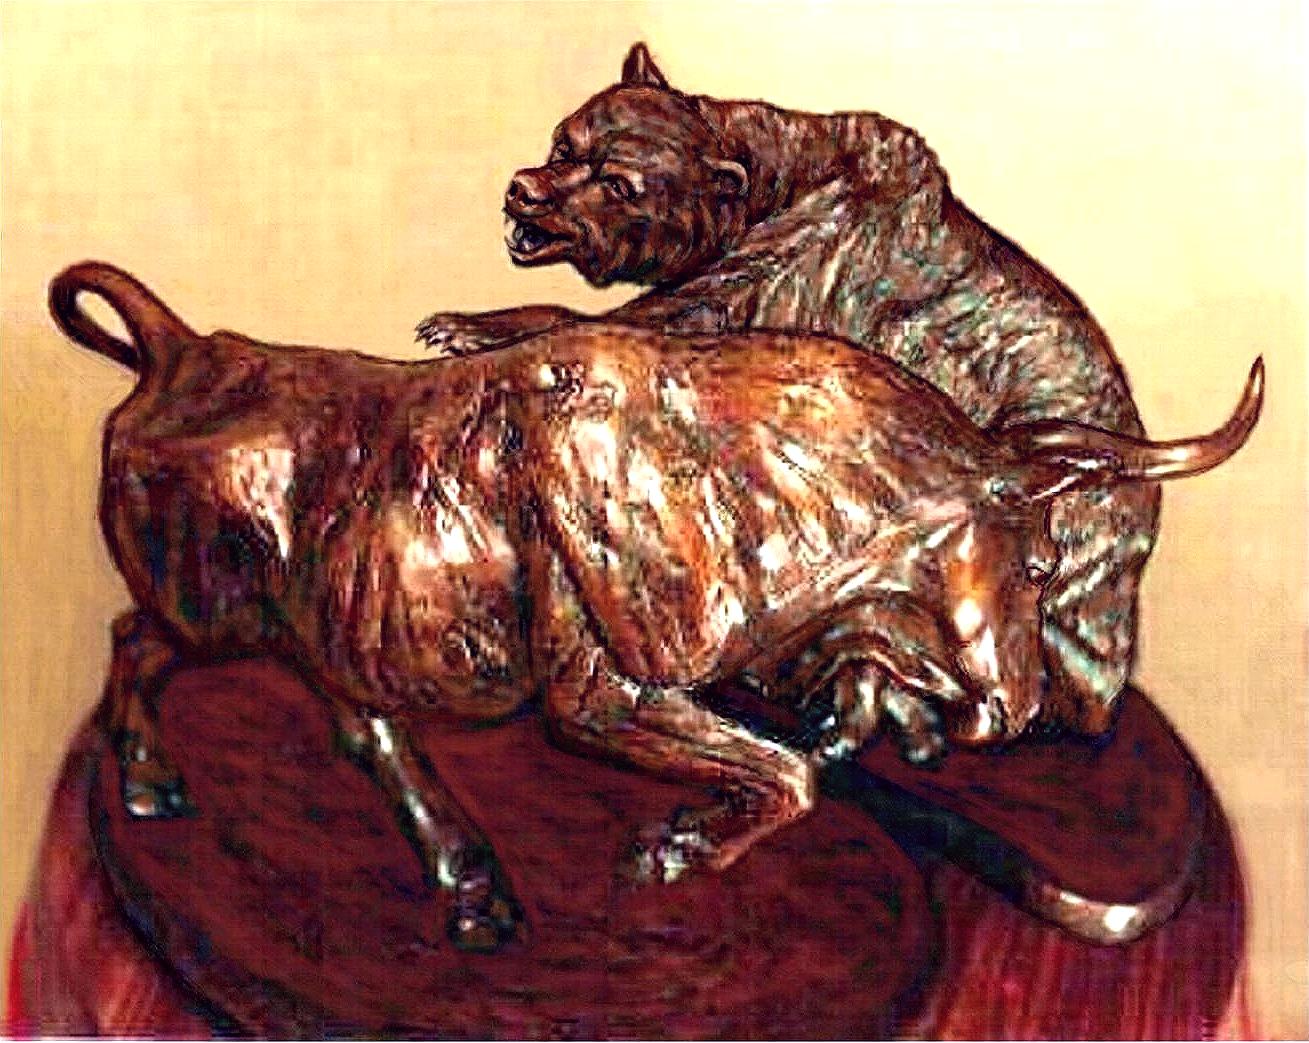 "The Bull & Bear" bronze